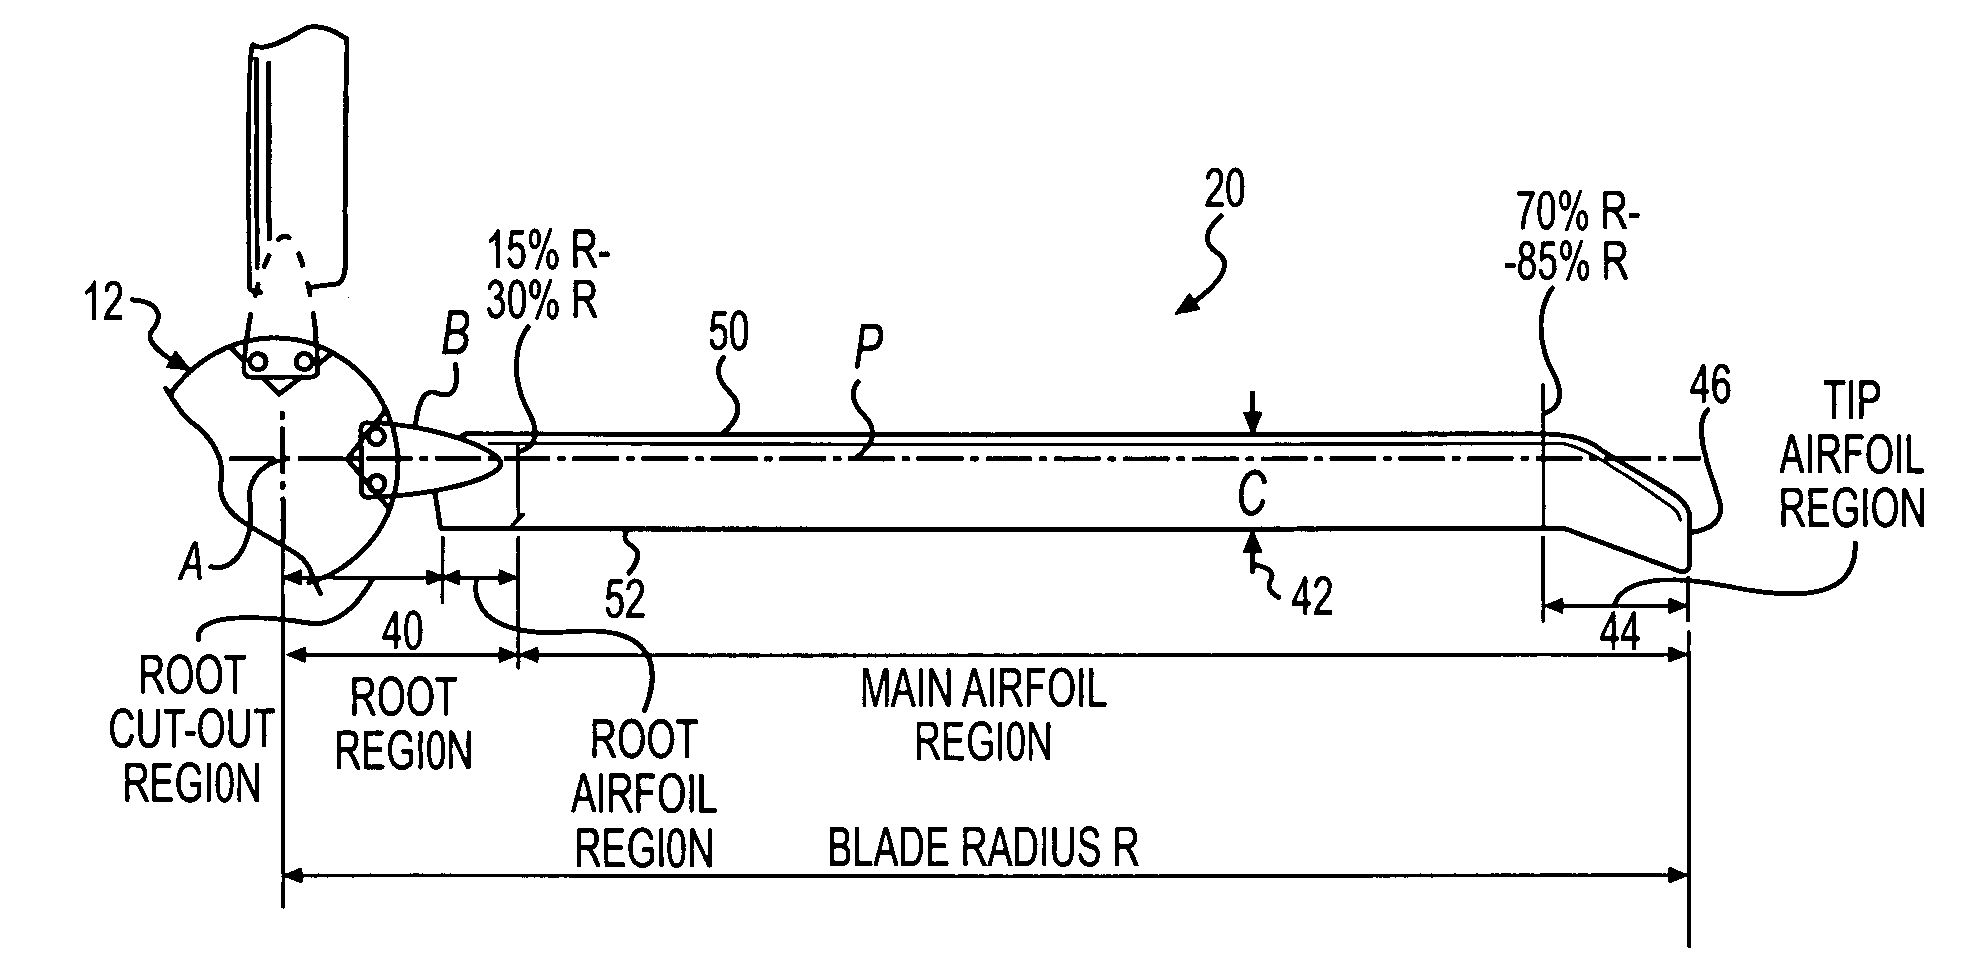 Rotor blade tip planform